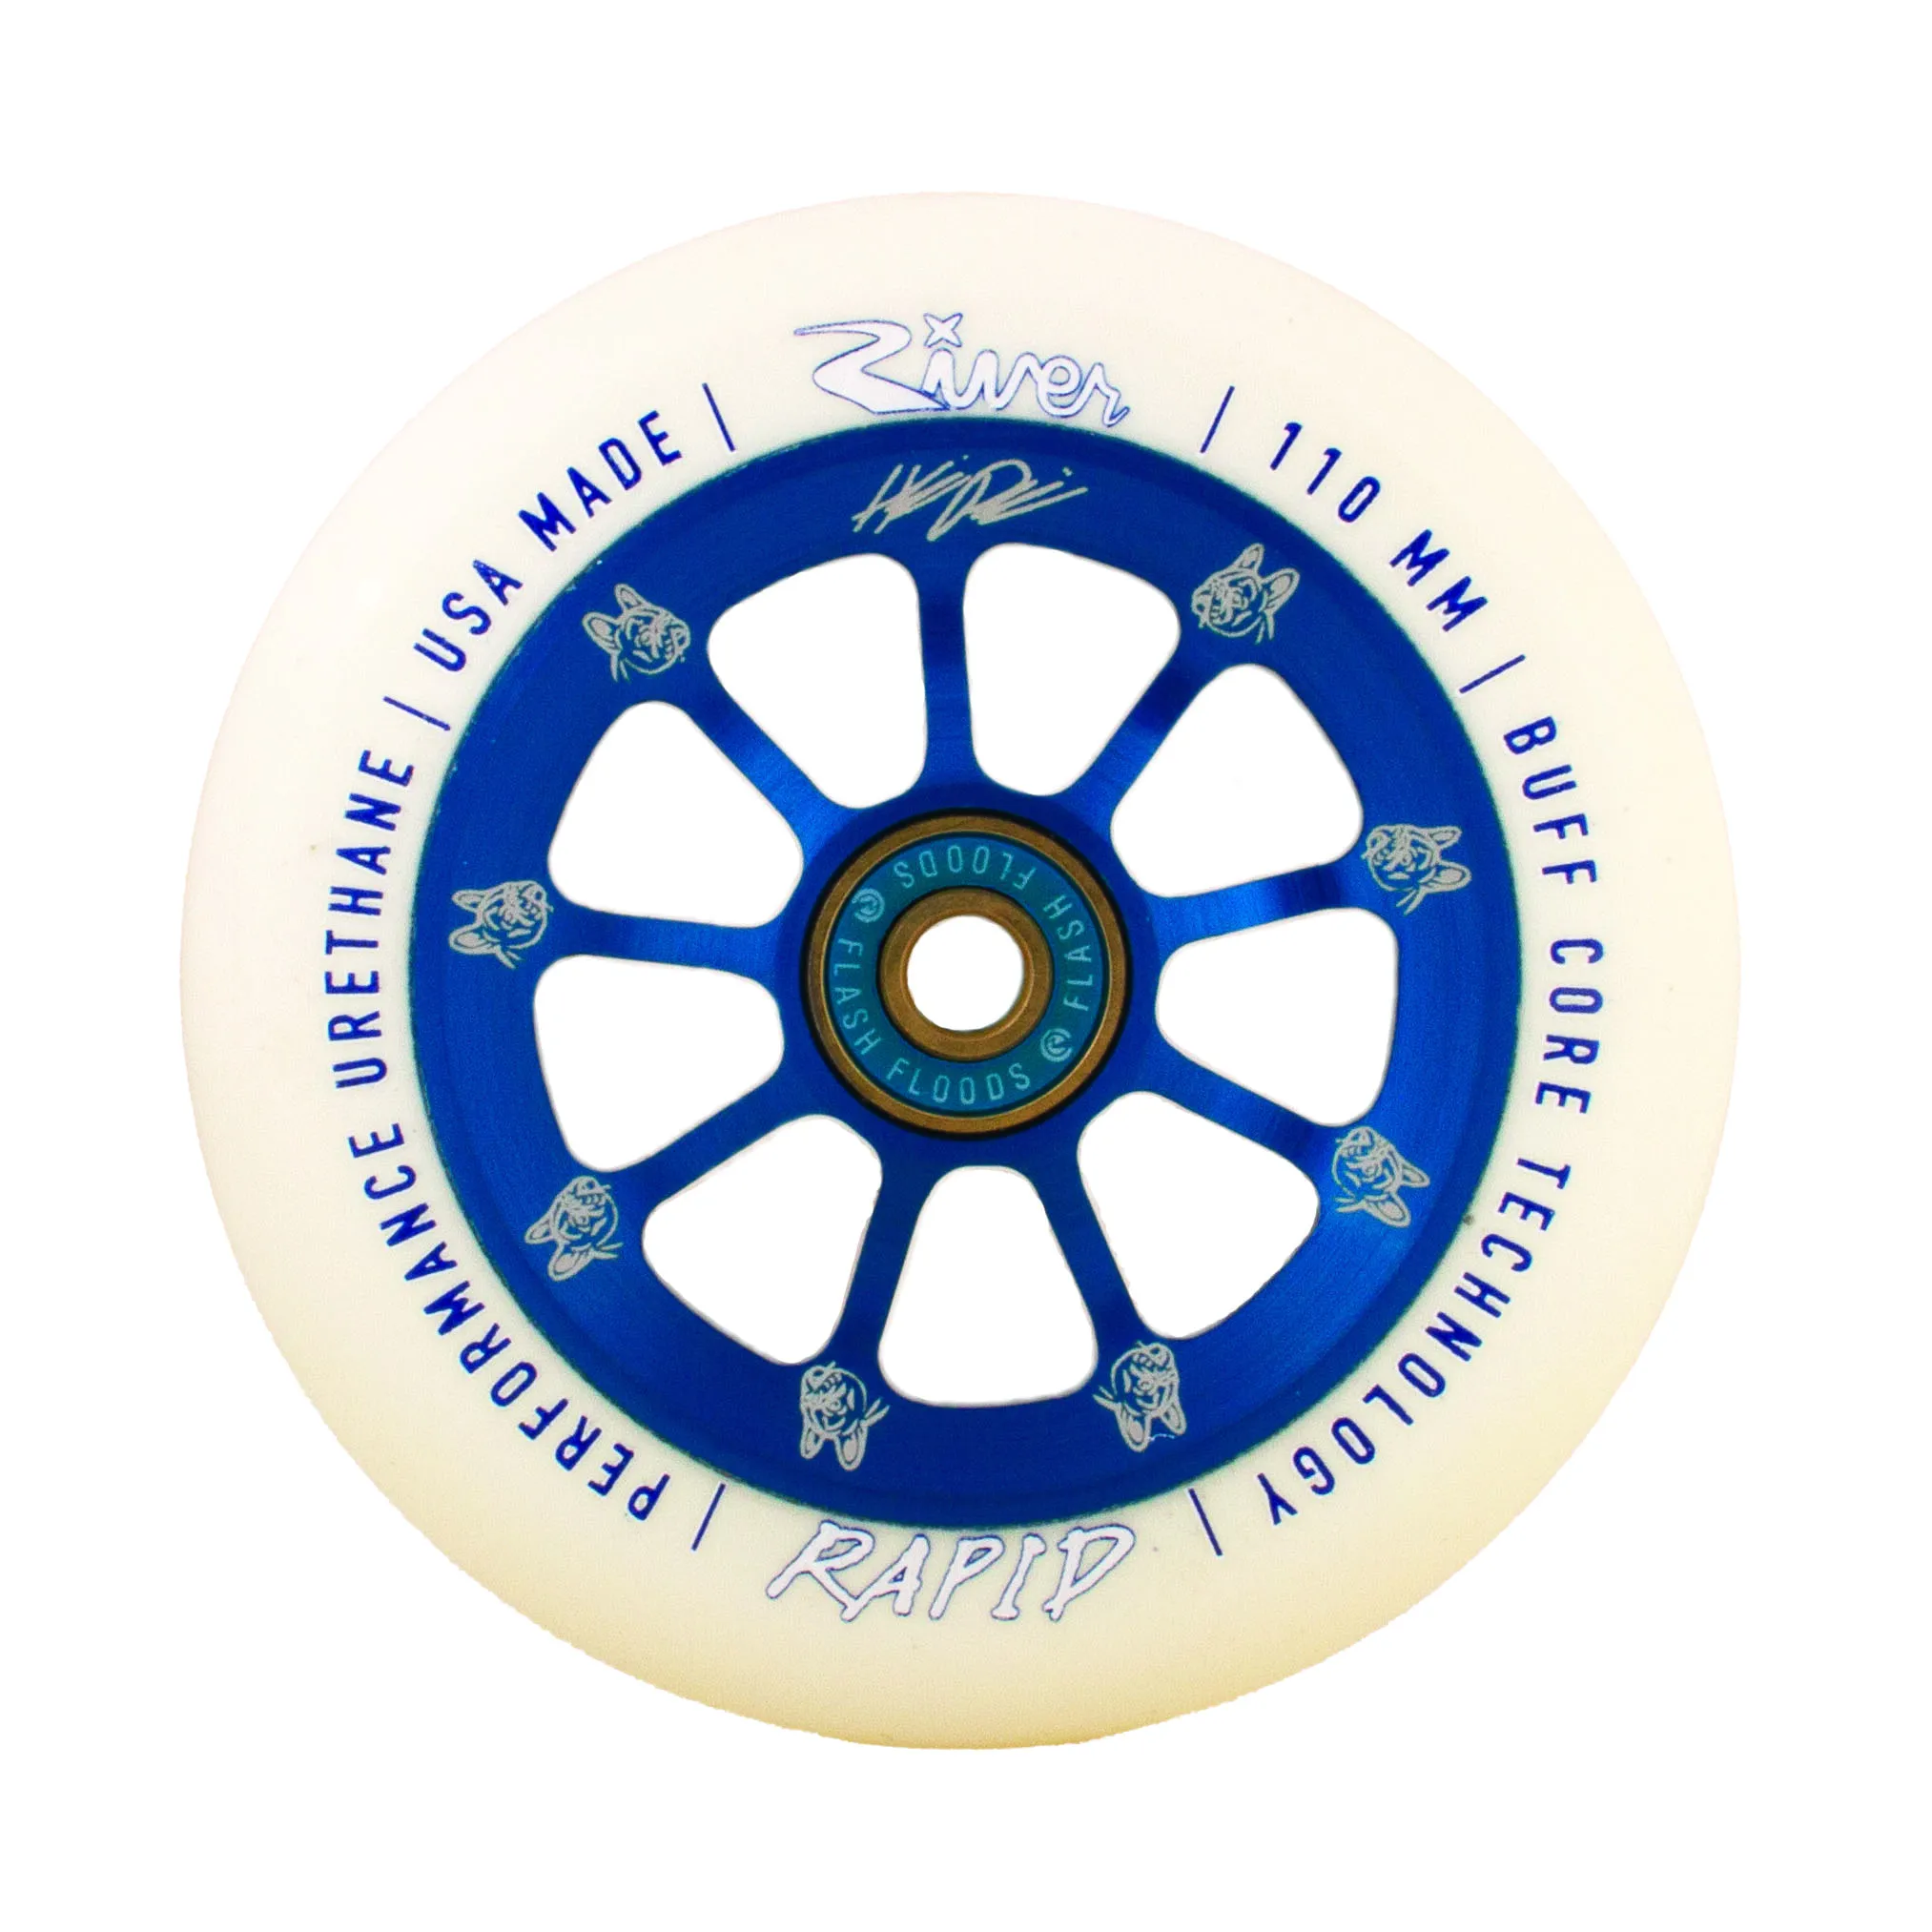 River Wheel Co - "Pablo" Rapids 110x24mm (Helmeri Pirinen Signature)